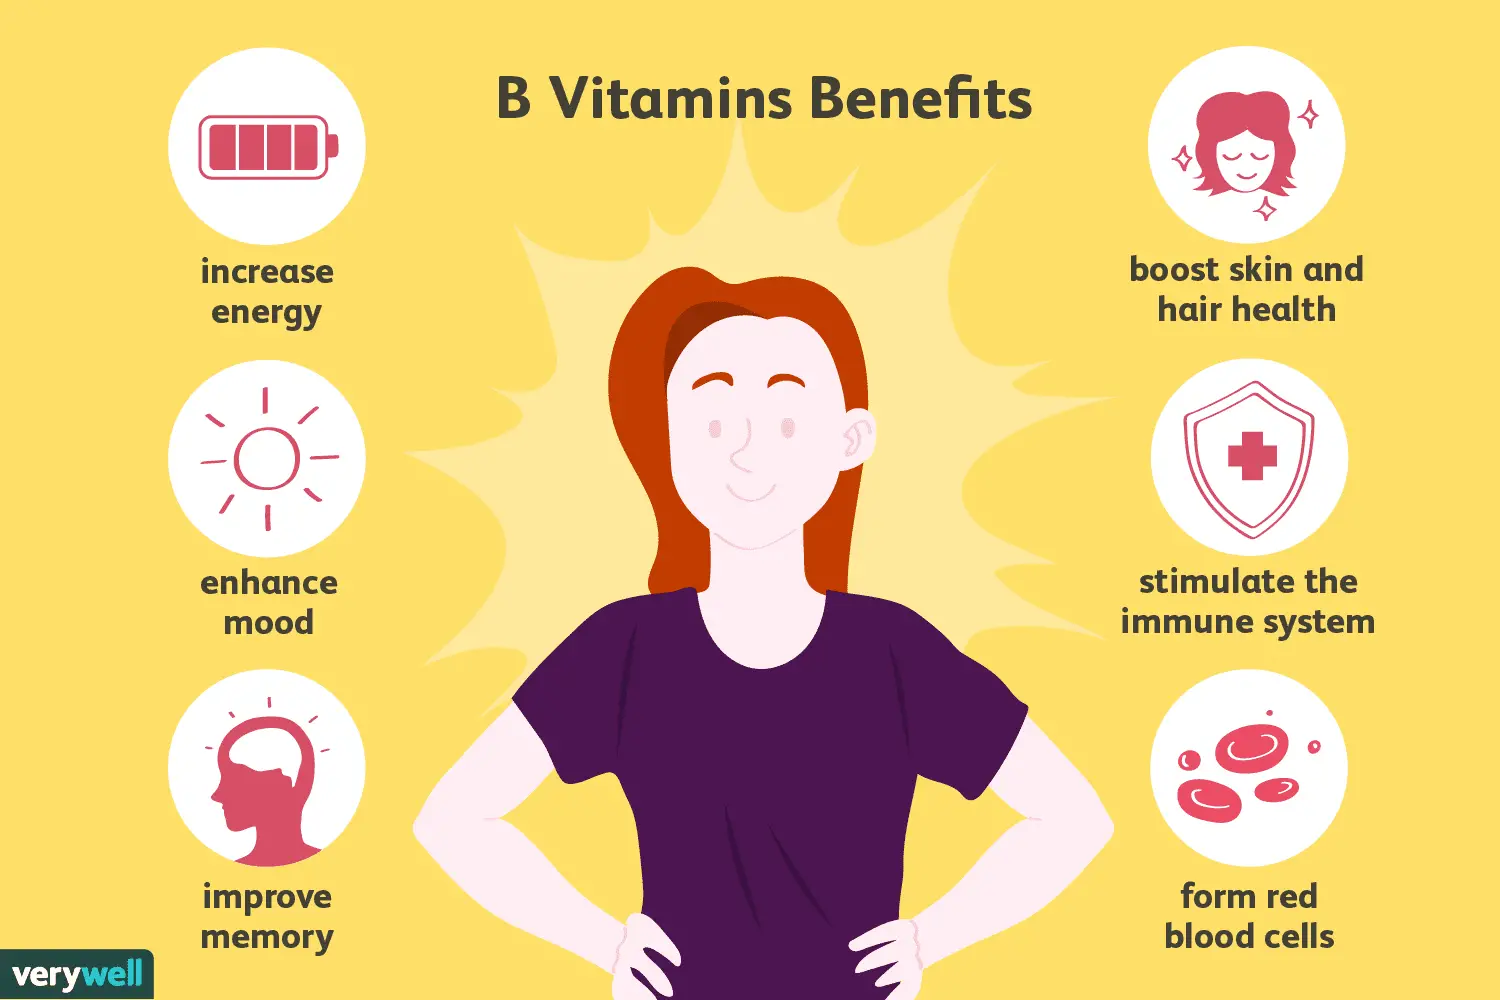 B Complex Vitamins Sources and Benefits